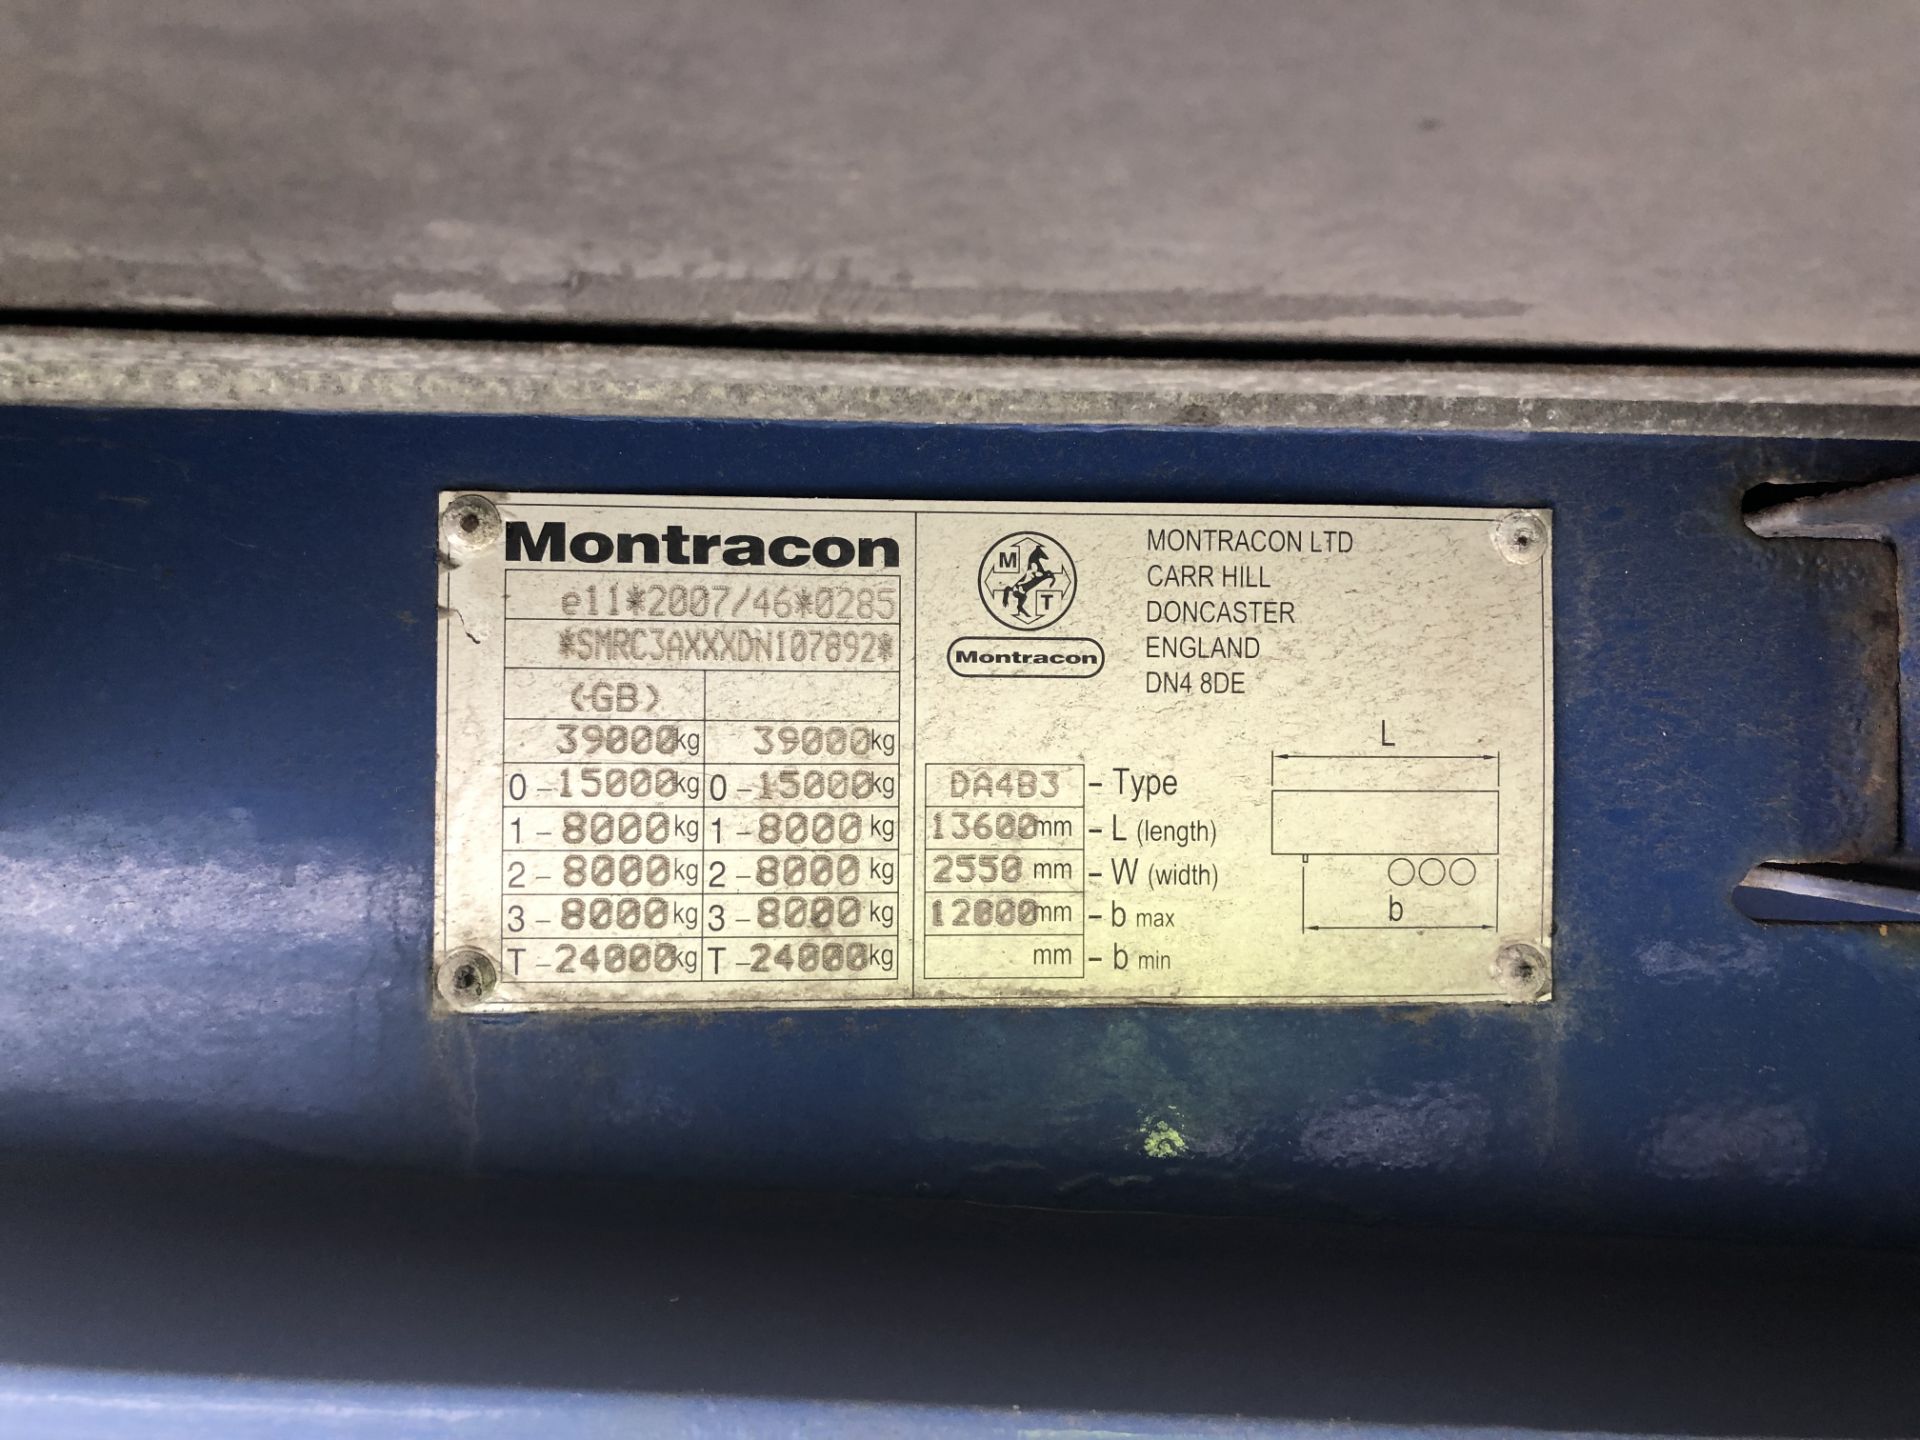 Montracon 13.6m Tri-Axle Curtainside Single Deck Semi-Trailer, chassis no. SMRC3AXXXDN107892, ID no. - Image 9 of 11